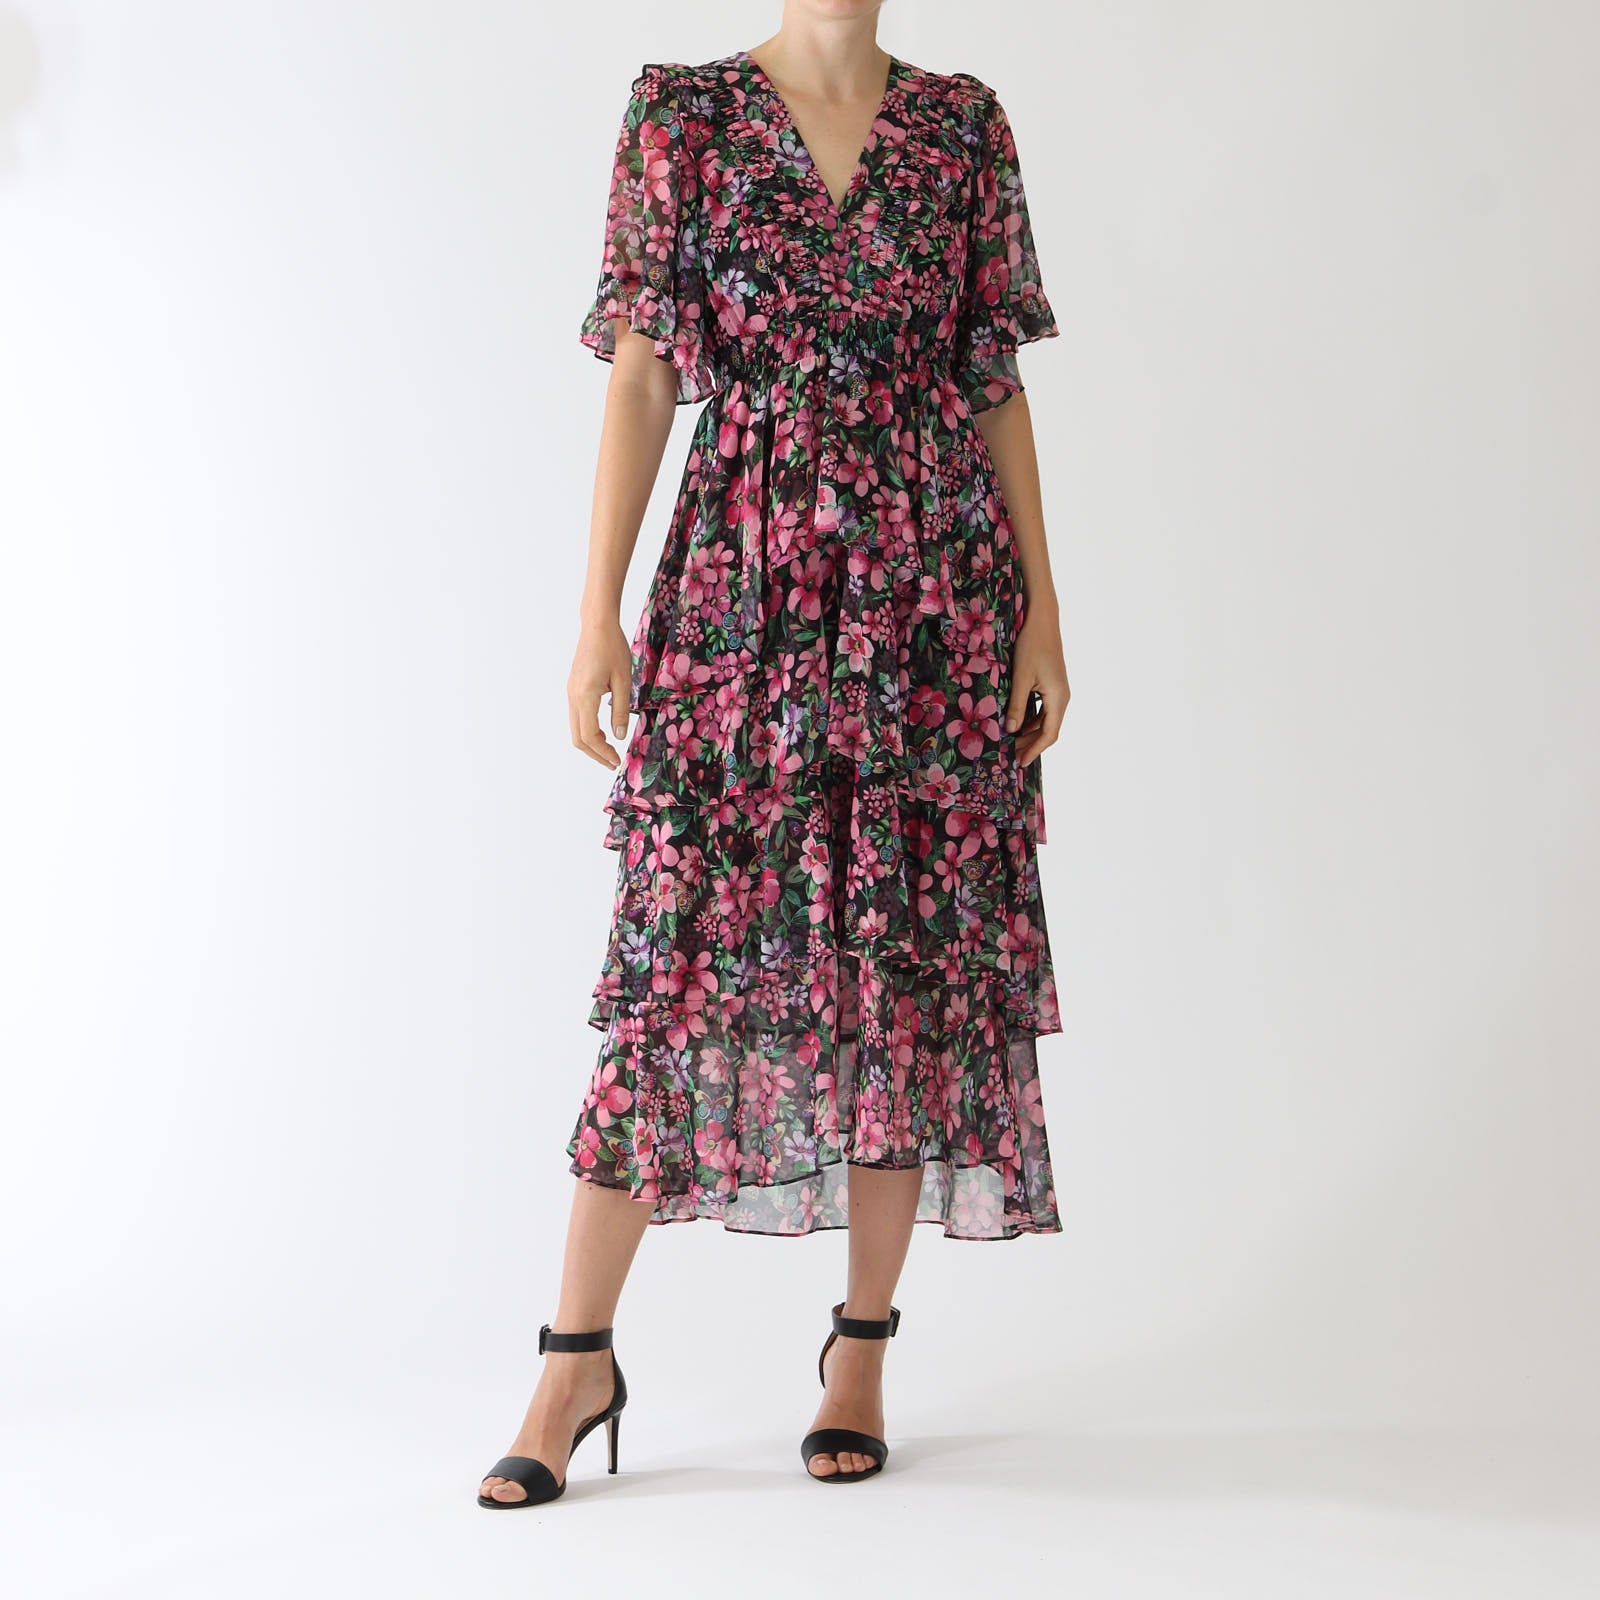 Natasha Black Floral Print Tiered Midi Dress